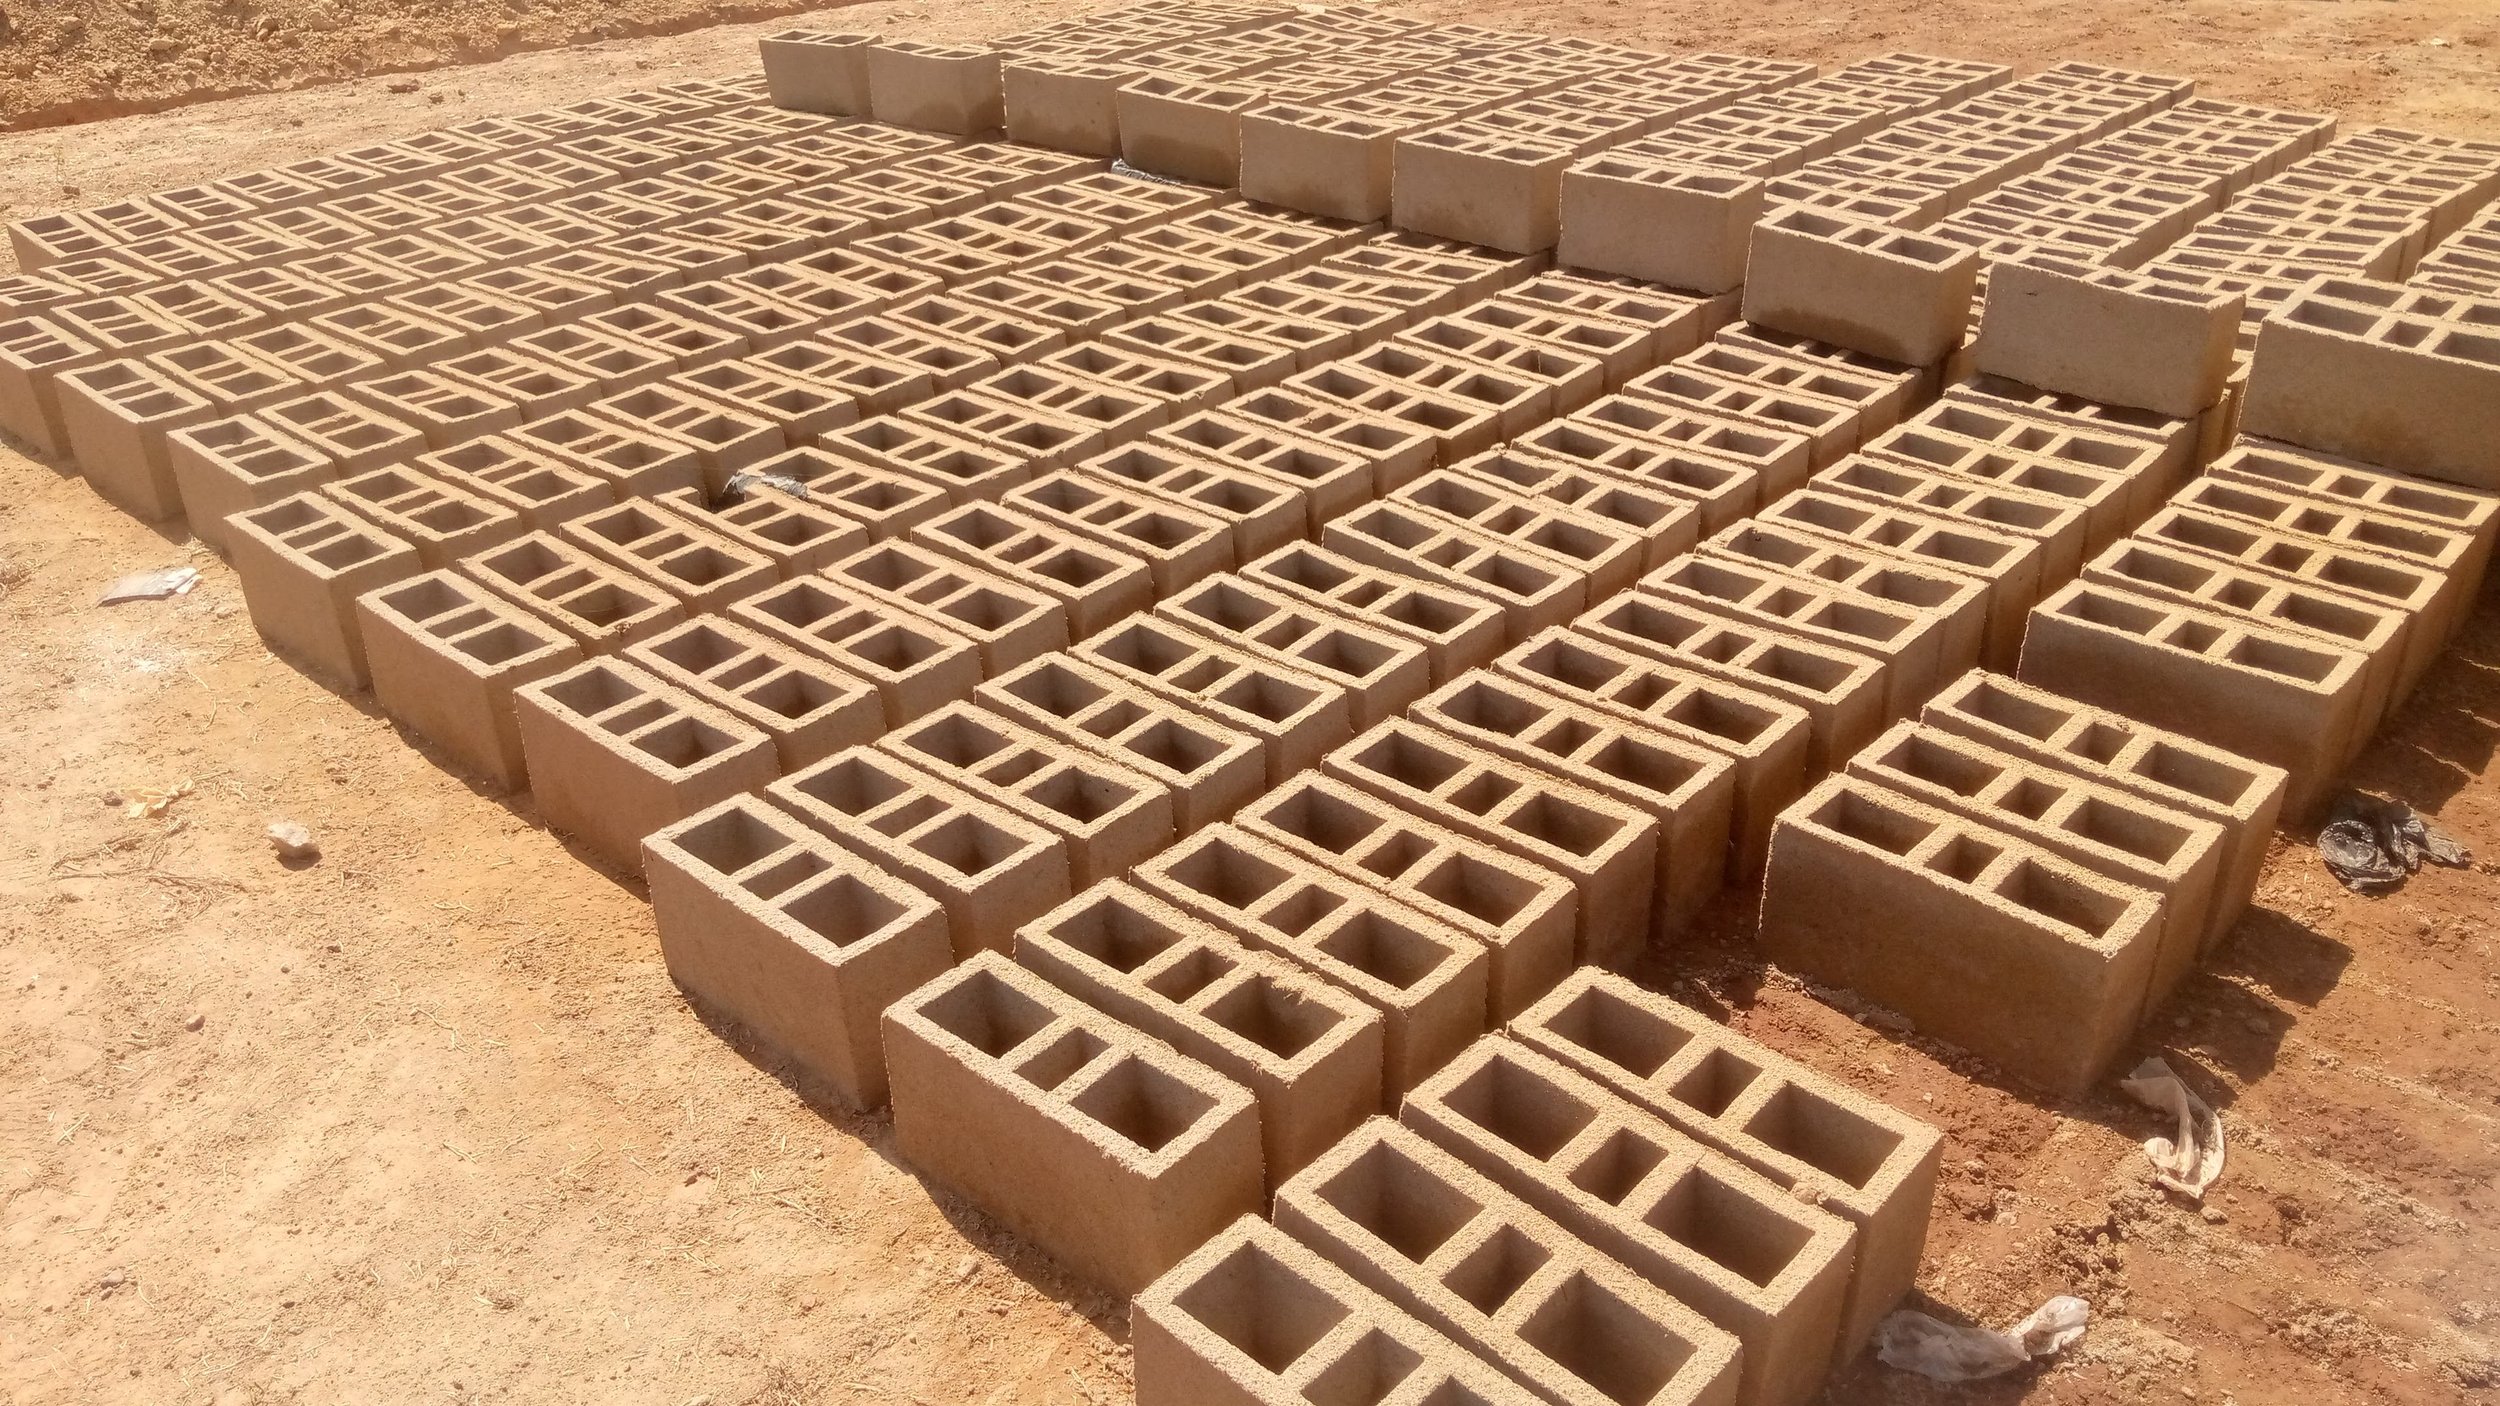 So very many bricks!